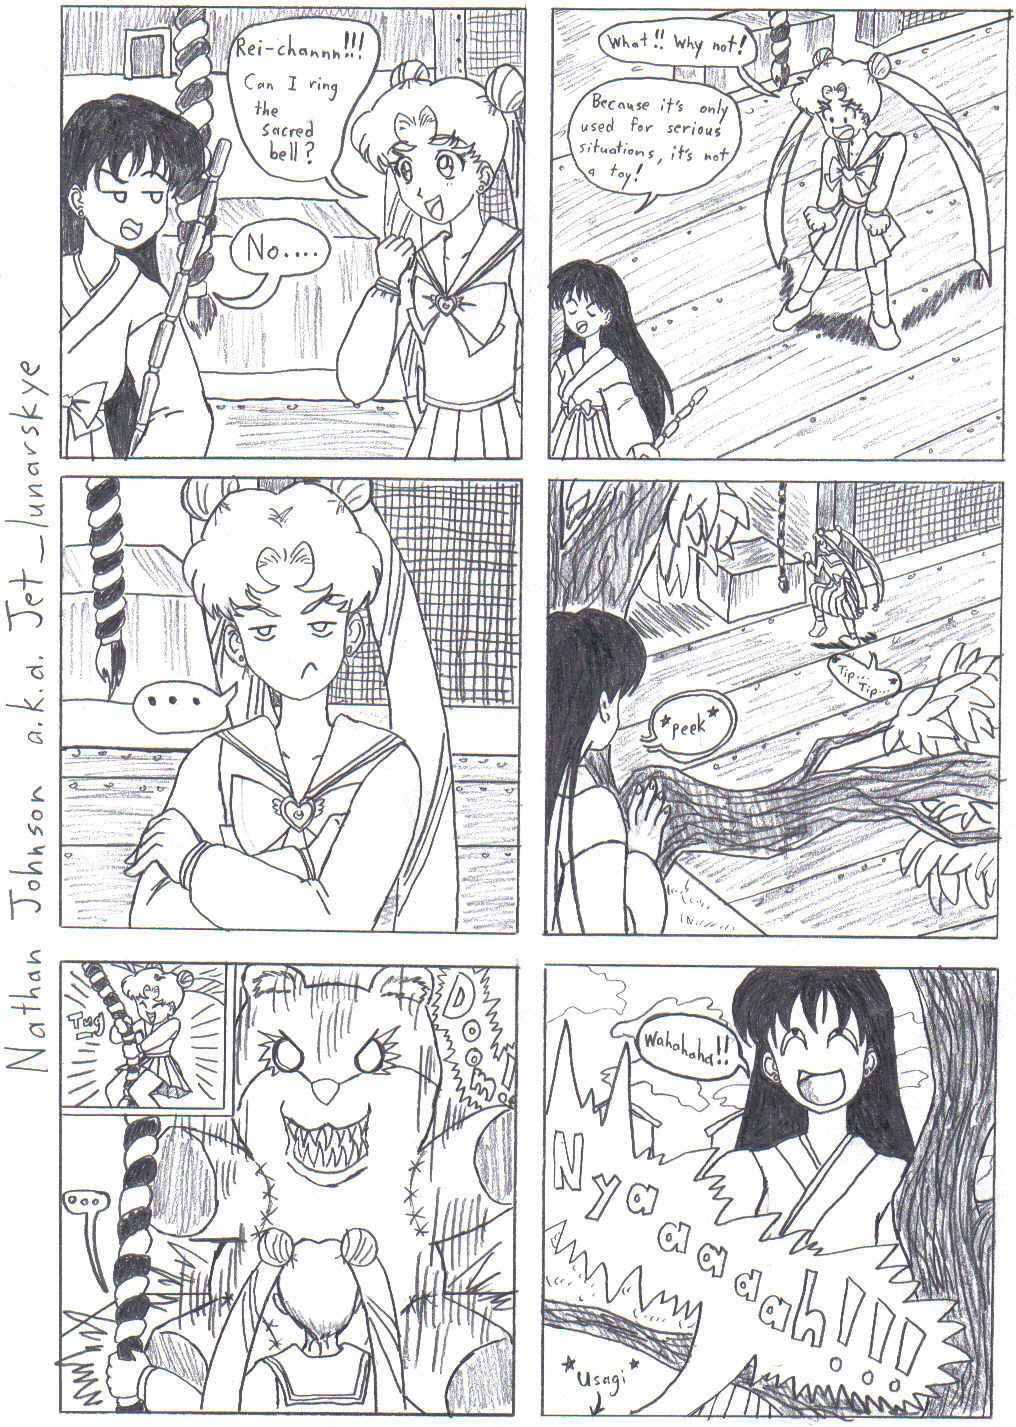 Hikawa Shrine Antics Mini-manga by Jet_lunarskye